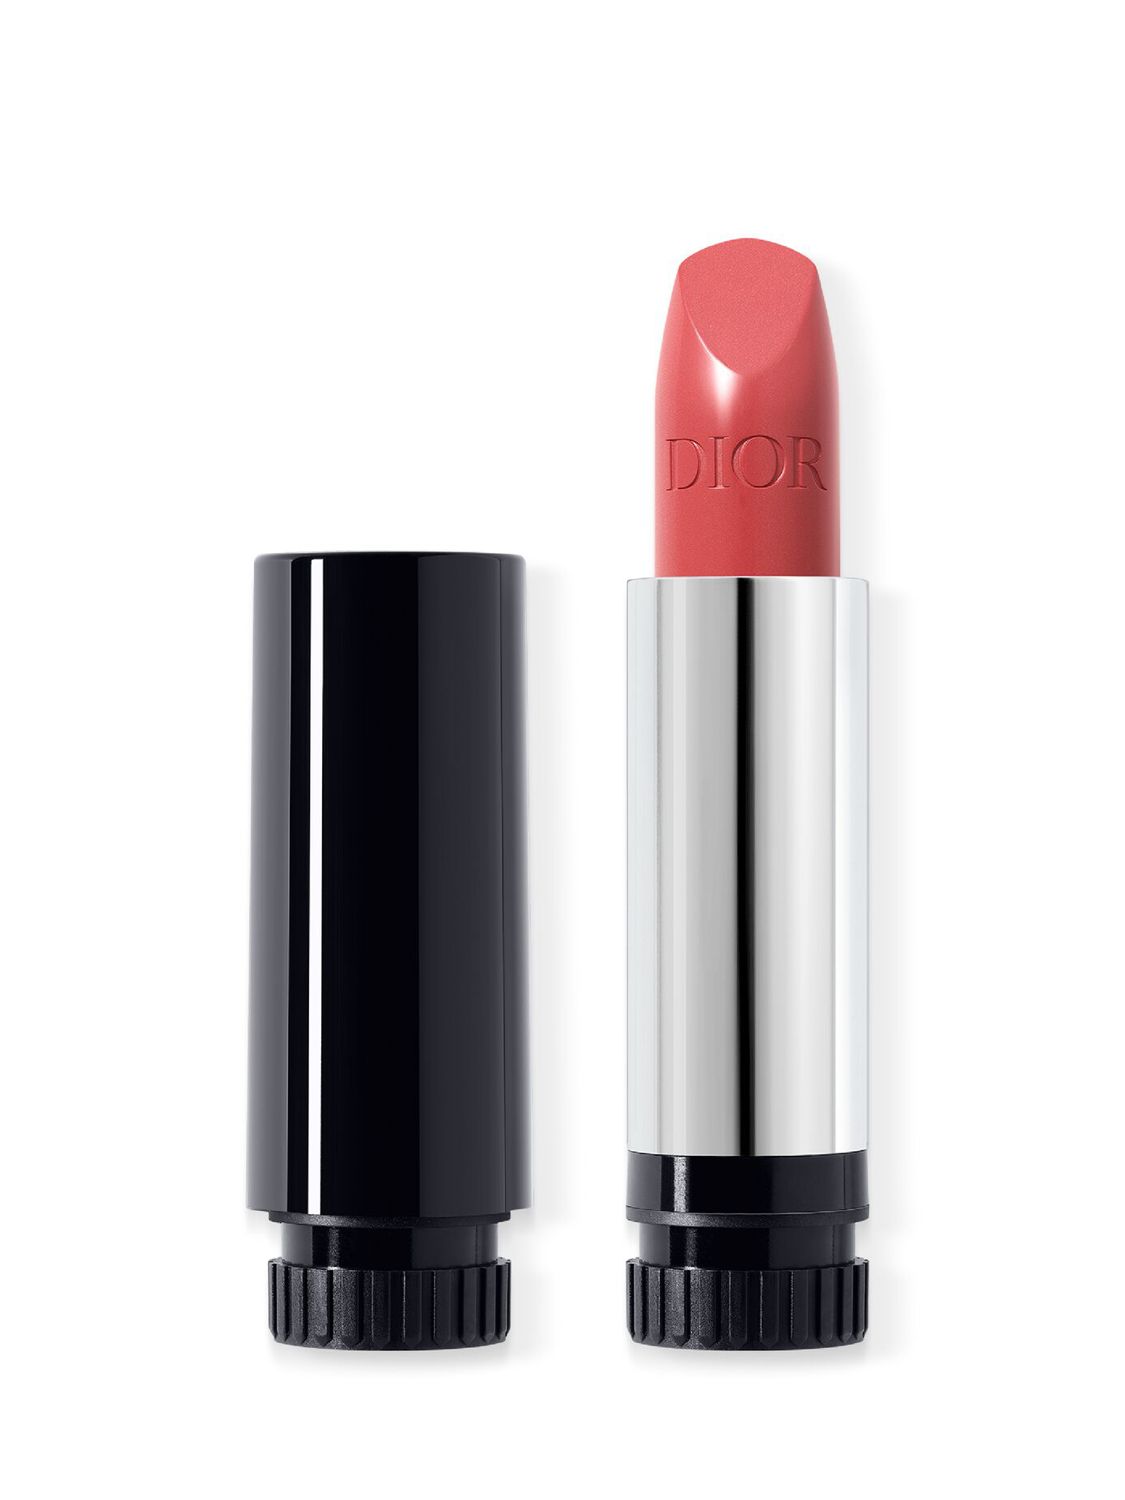 DIOR Rouge Dior Couture Colour Lipstick Refill - Satin Finish, 458 Paris 1